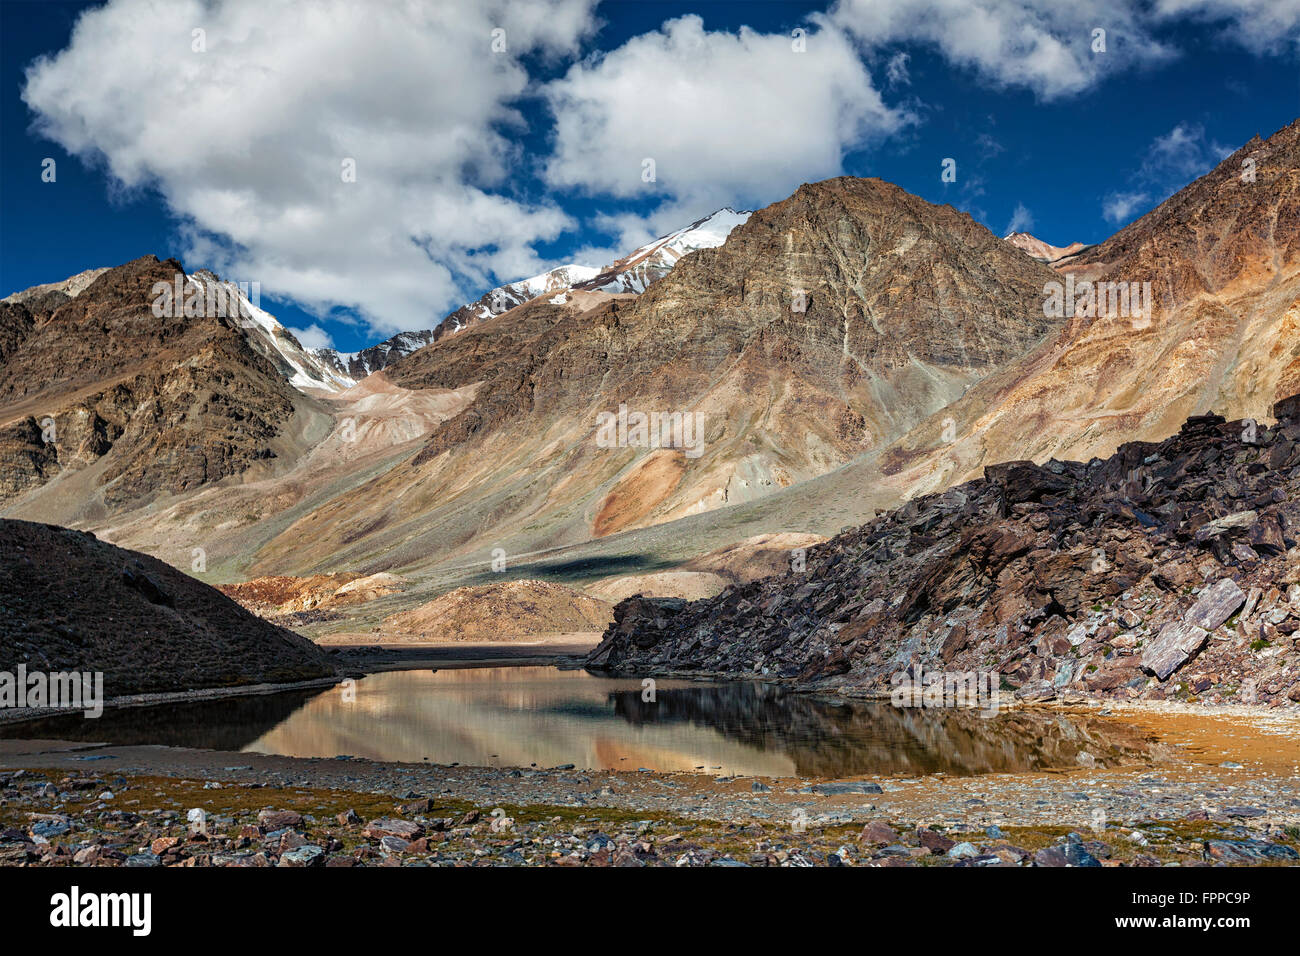 Himalayan landscape with mountain lake Stock Photo